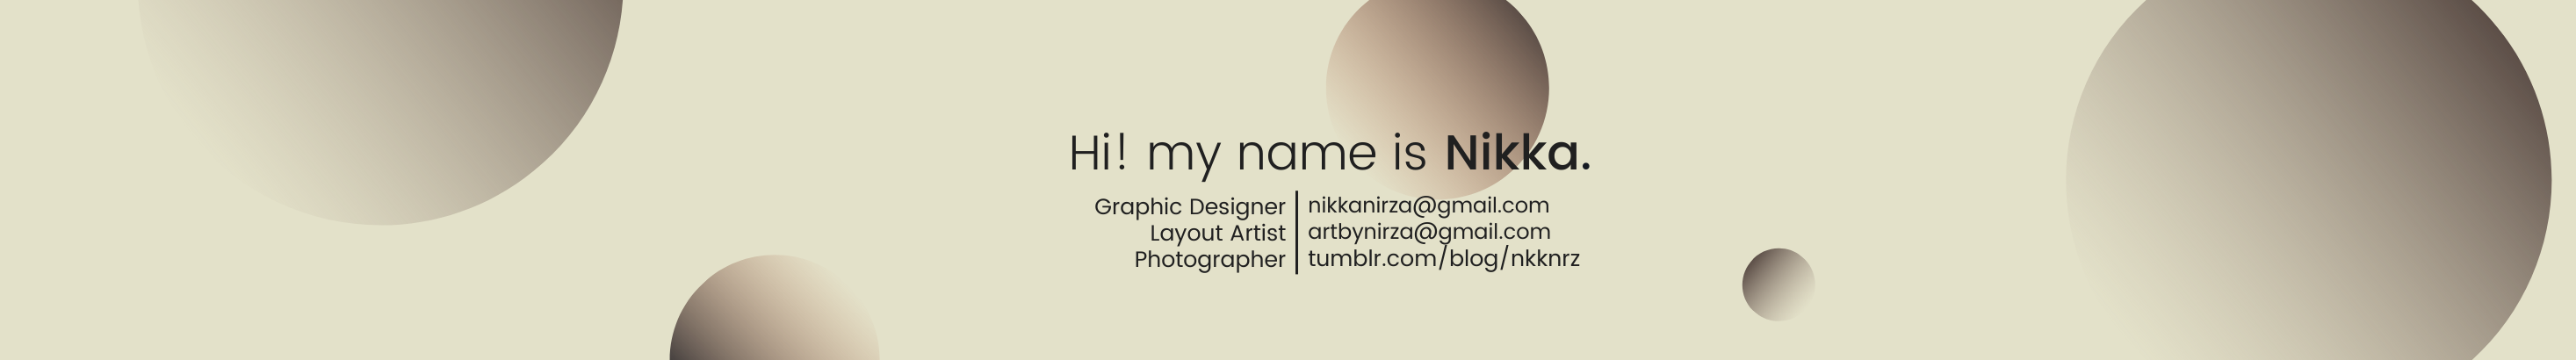 Nikka Nirza's profile banner